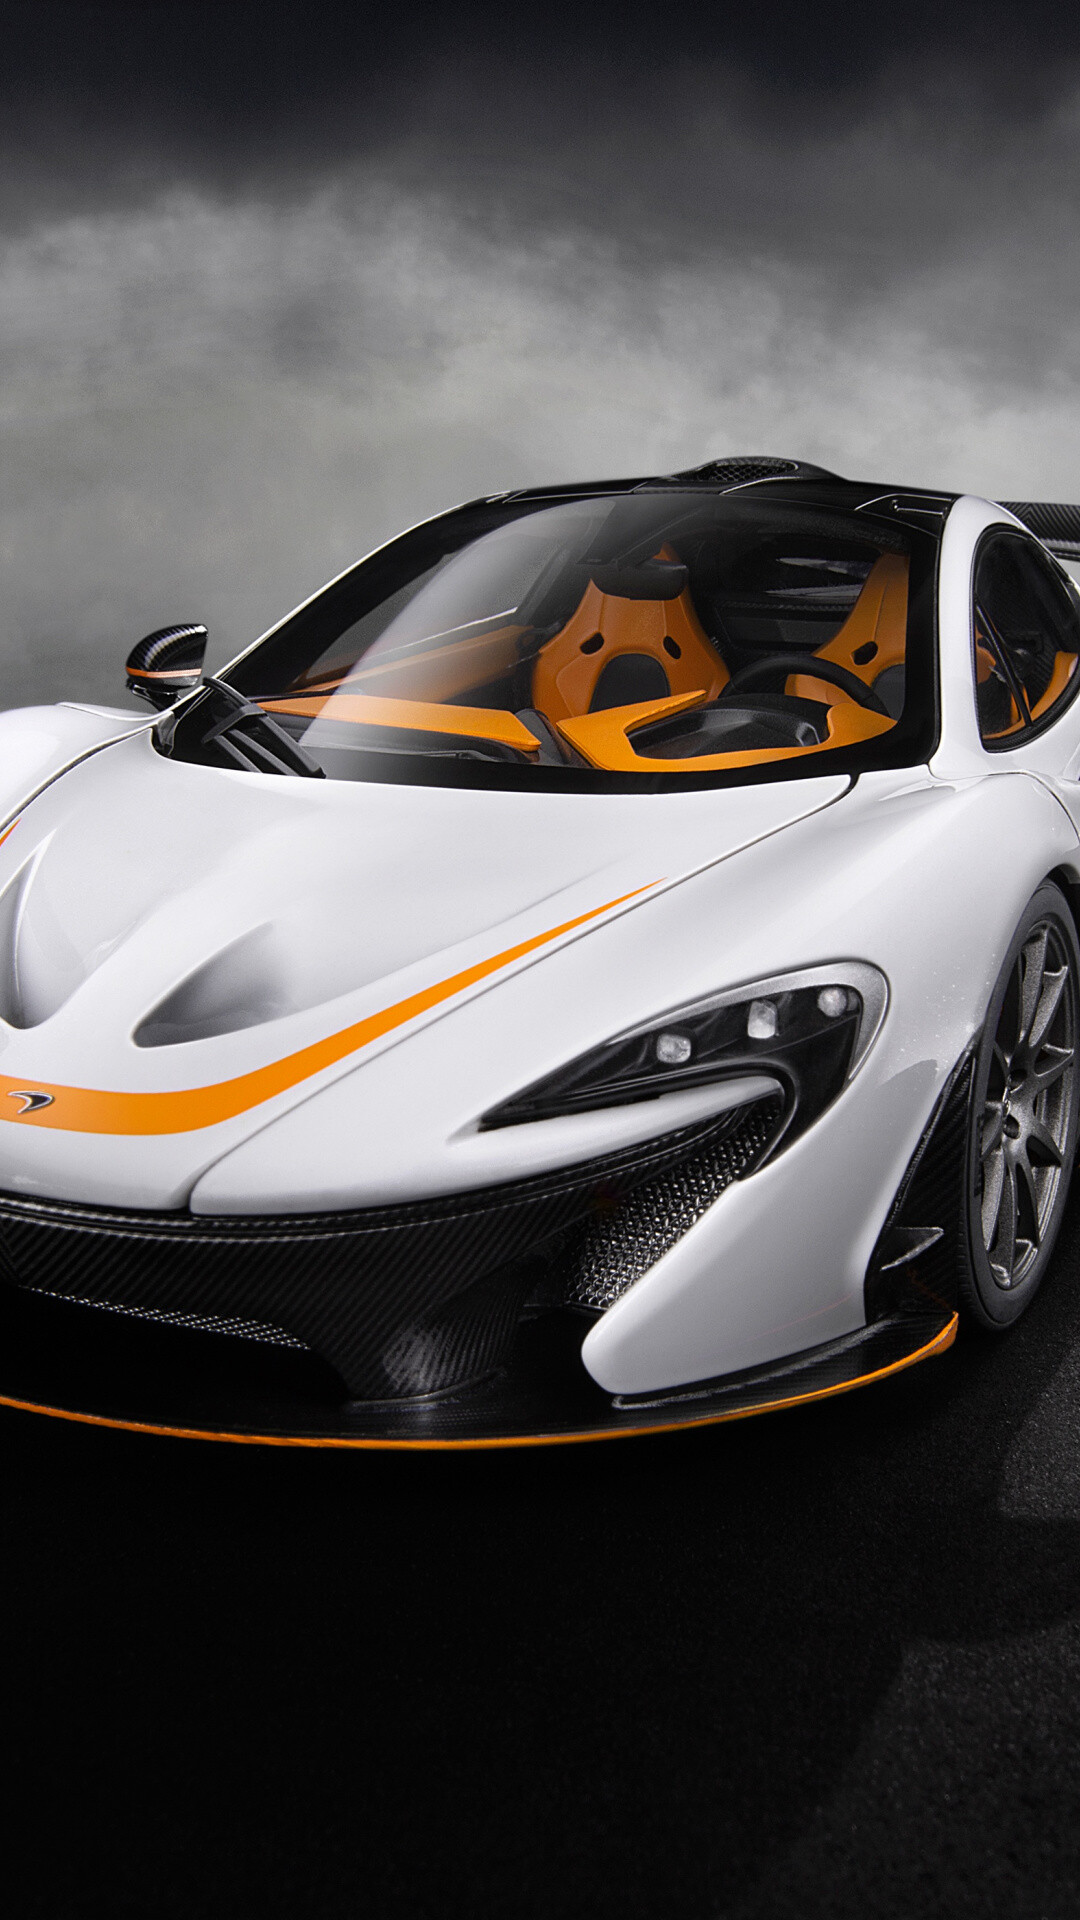 McLaren: A legendary British supercar manufacturer based in the UK, P1. 1080x1920 Full HD Wallpaper.